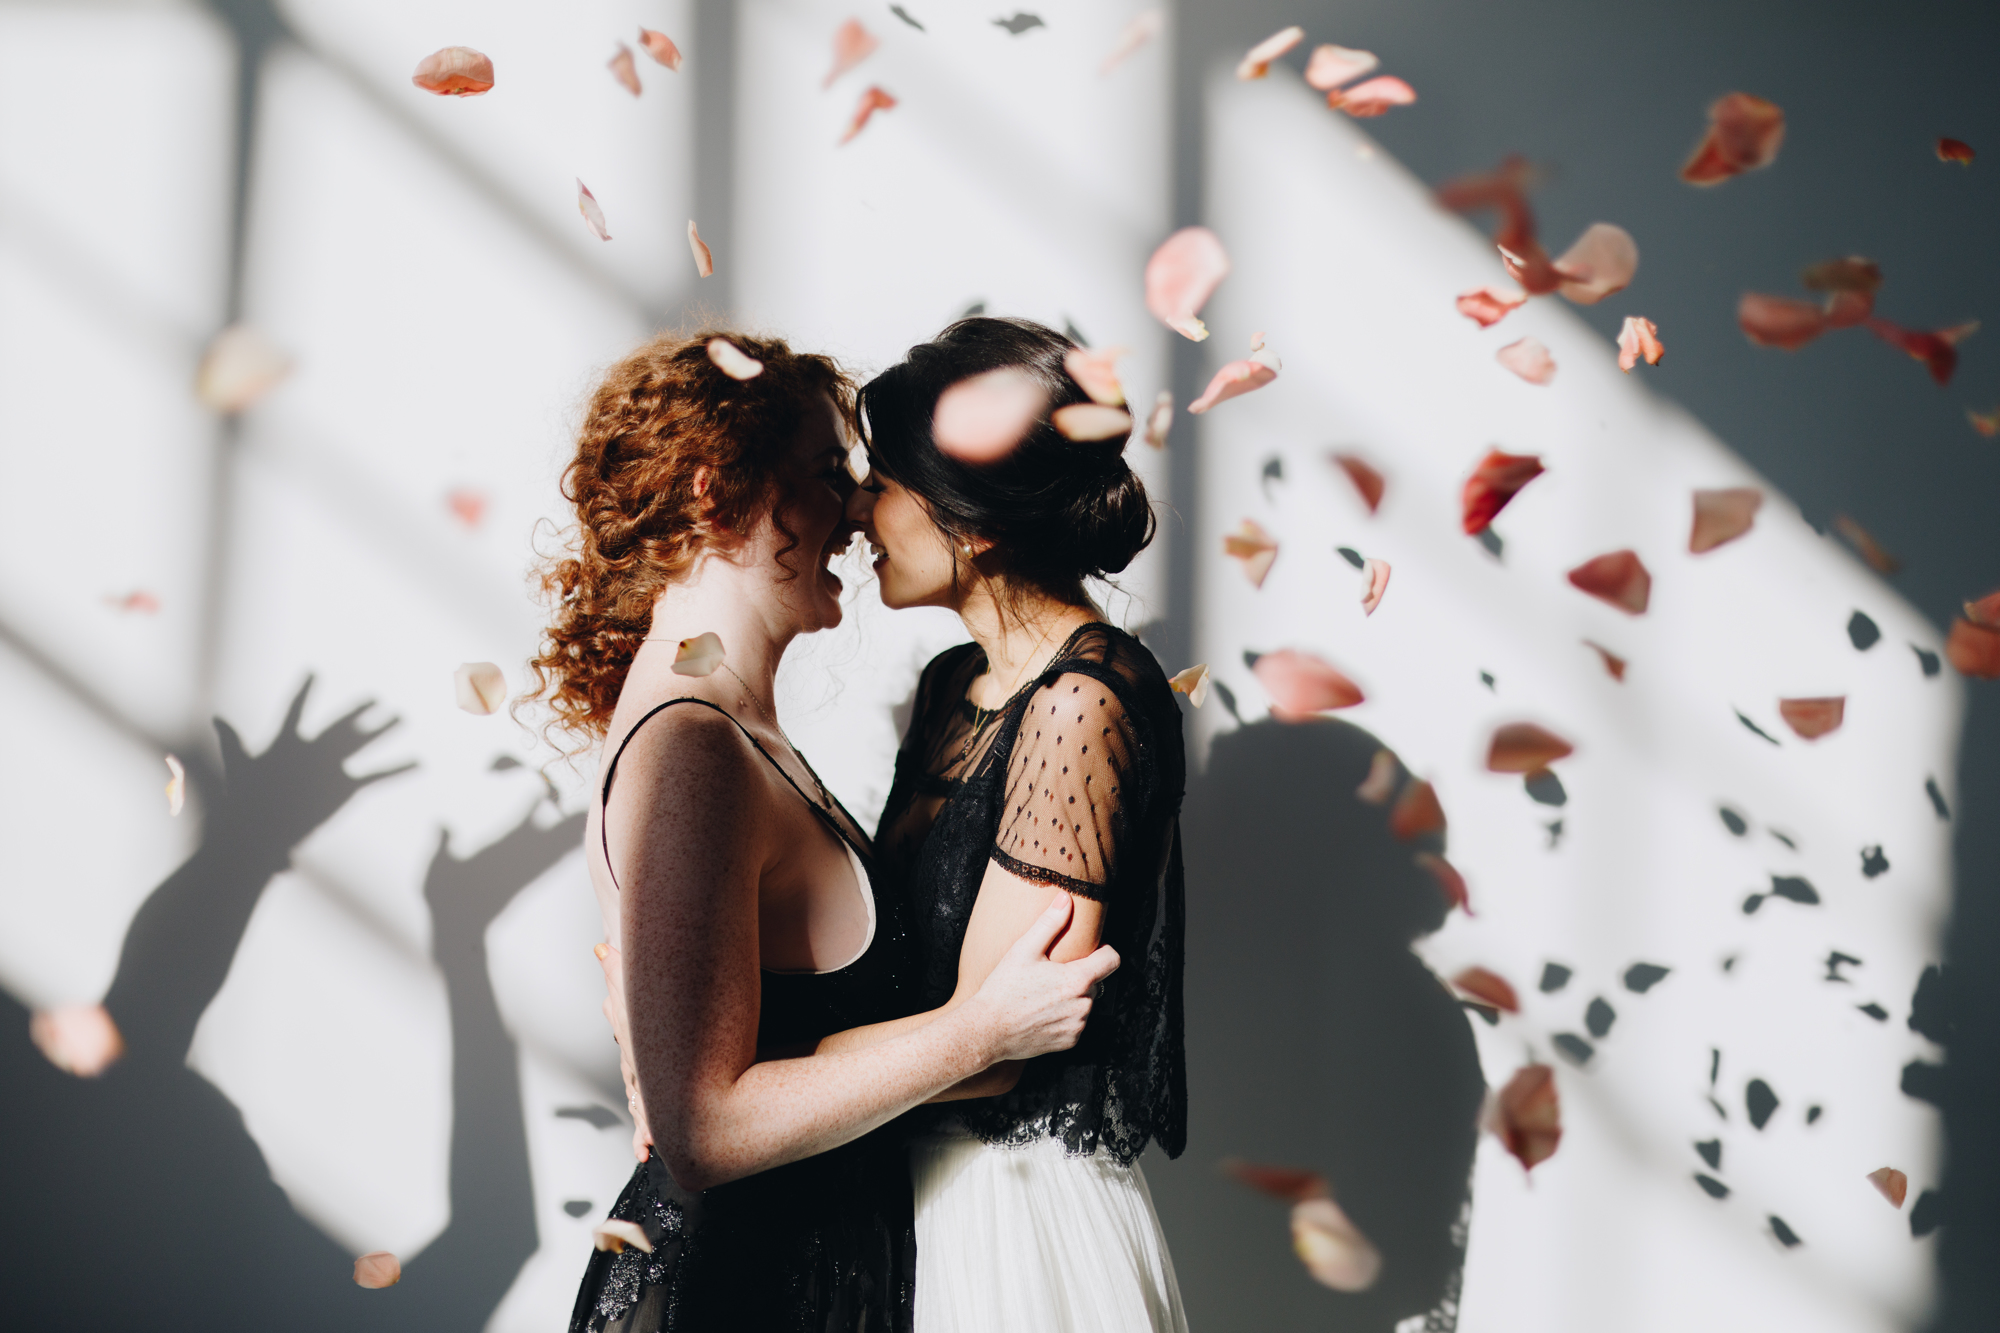 Small Radiant LGBTQ Wedding Inspiration at Sound River Studios